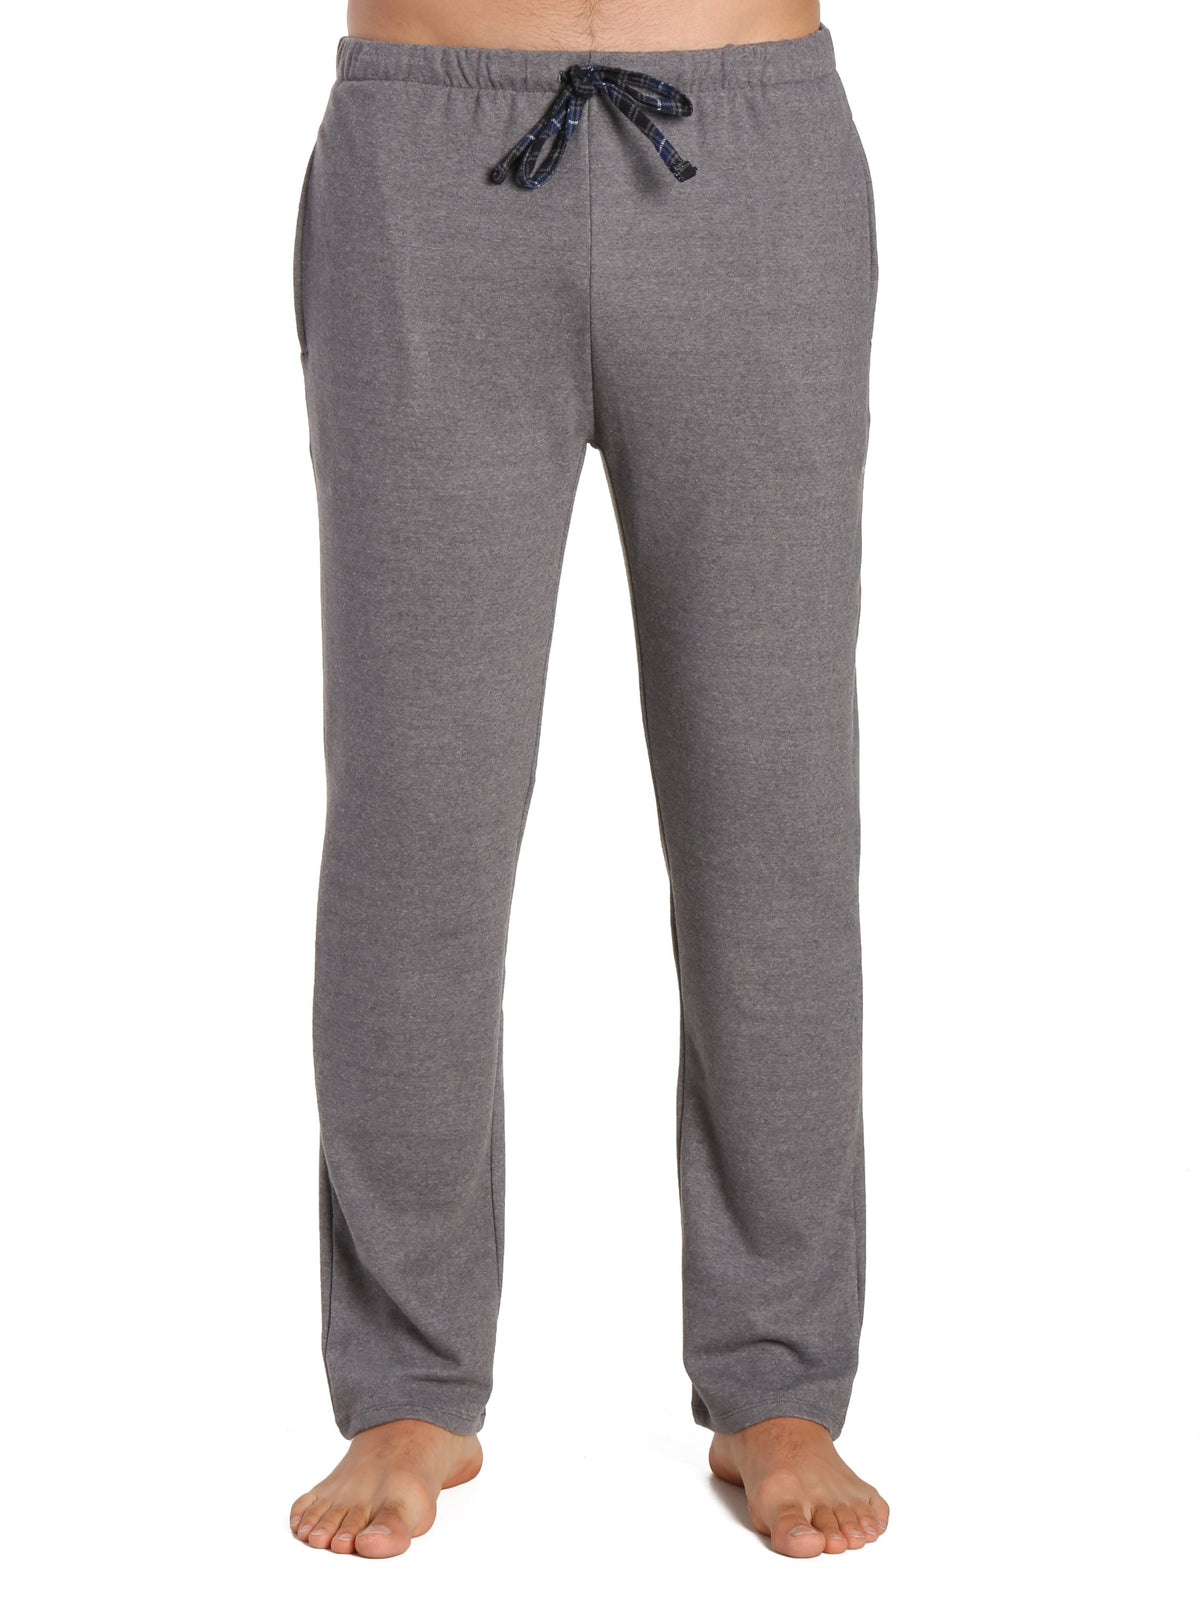 Men's Soft Brushed Rib Lounge Pant - Heathered Dark Grey